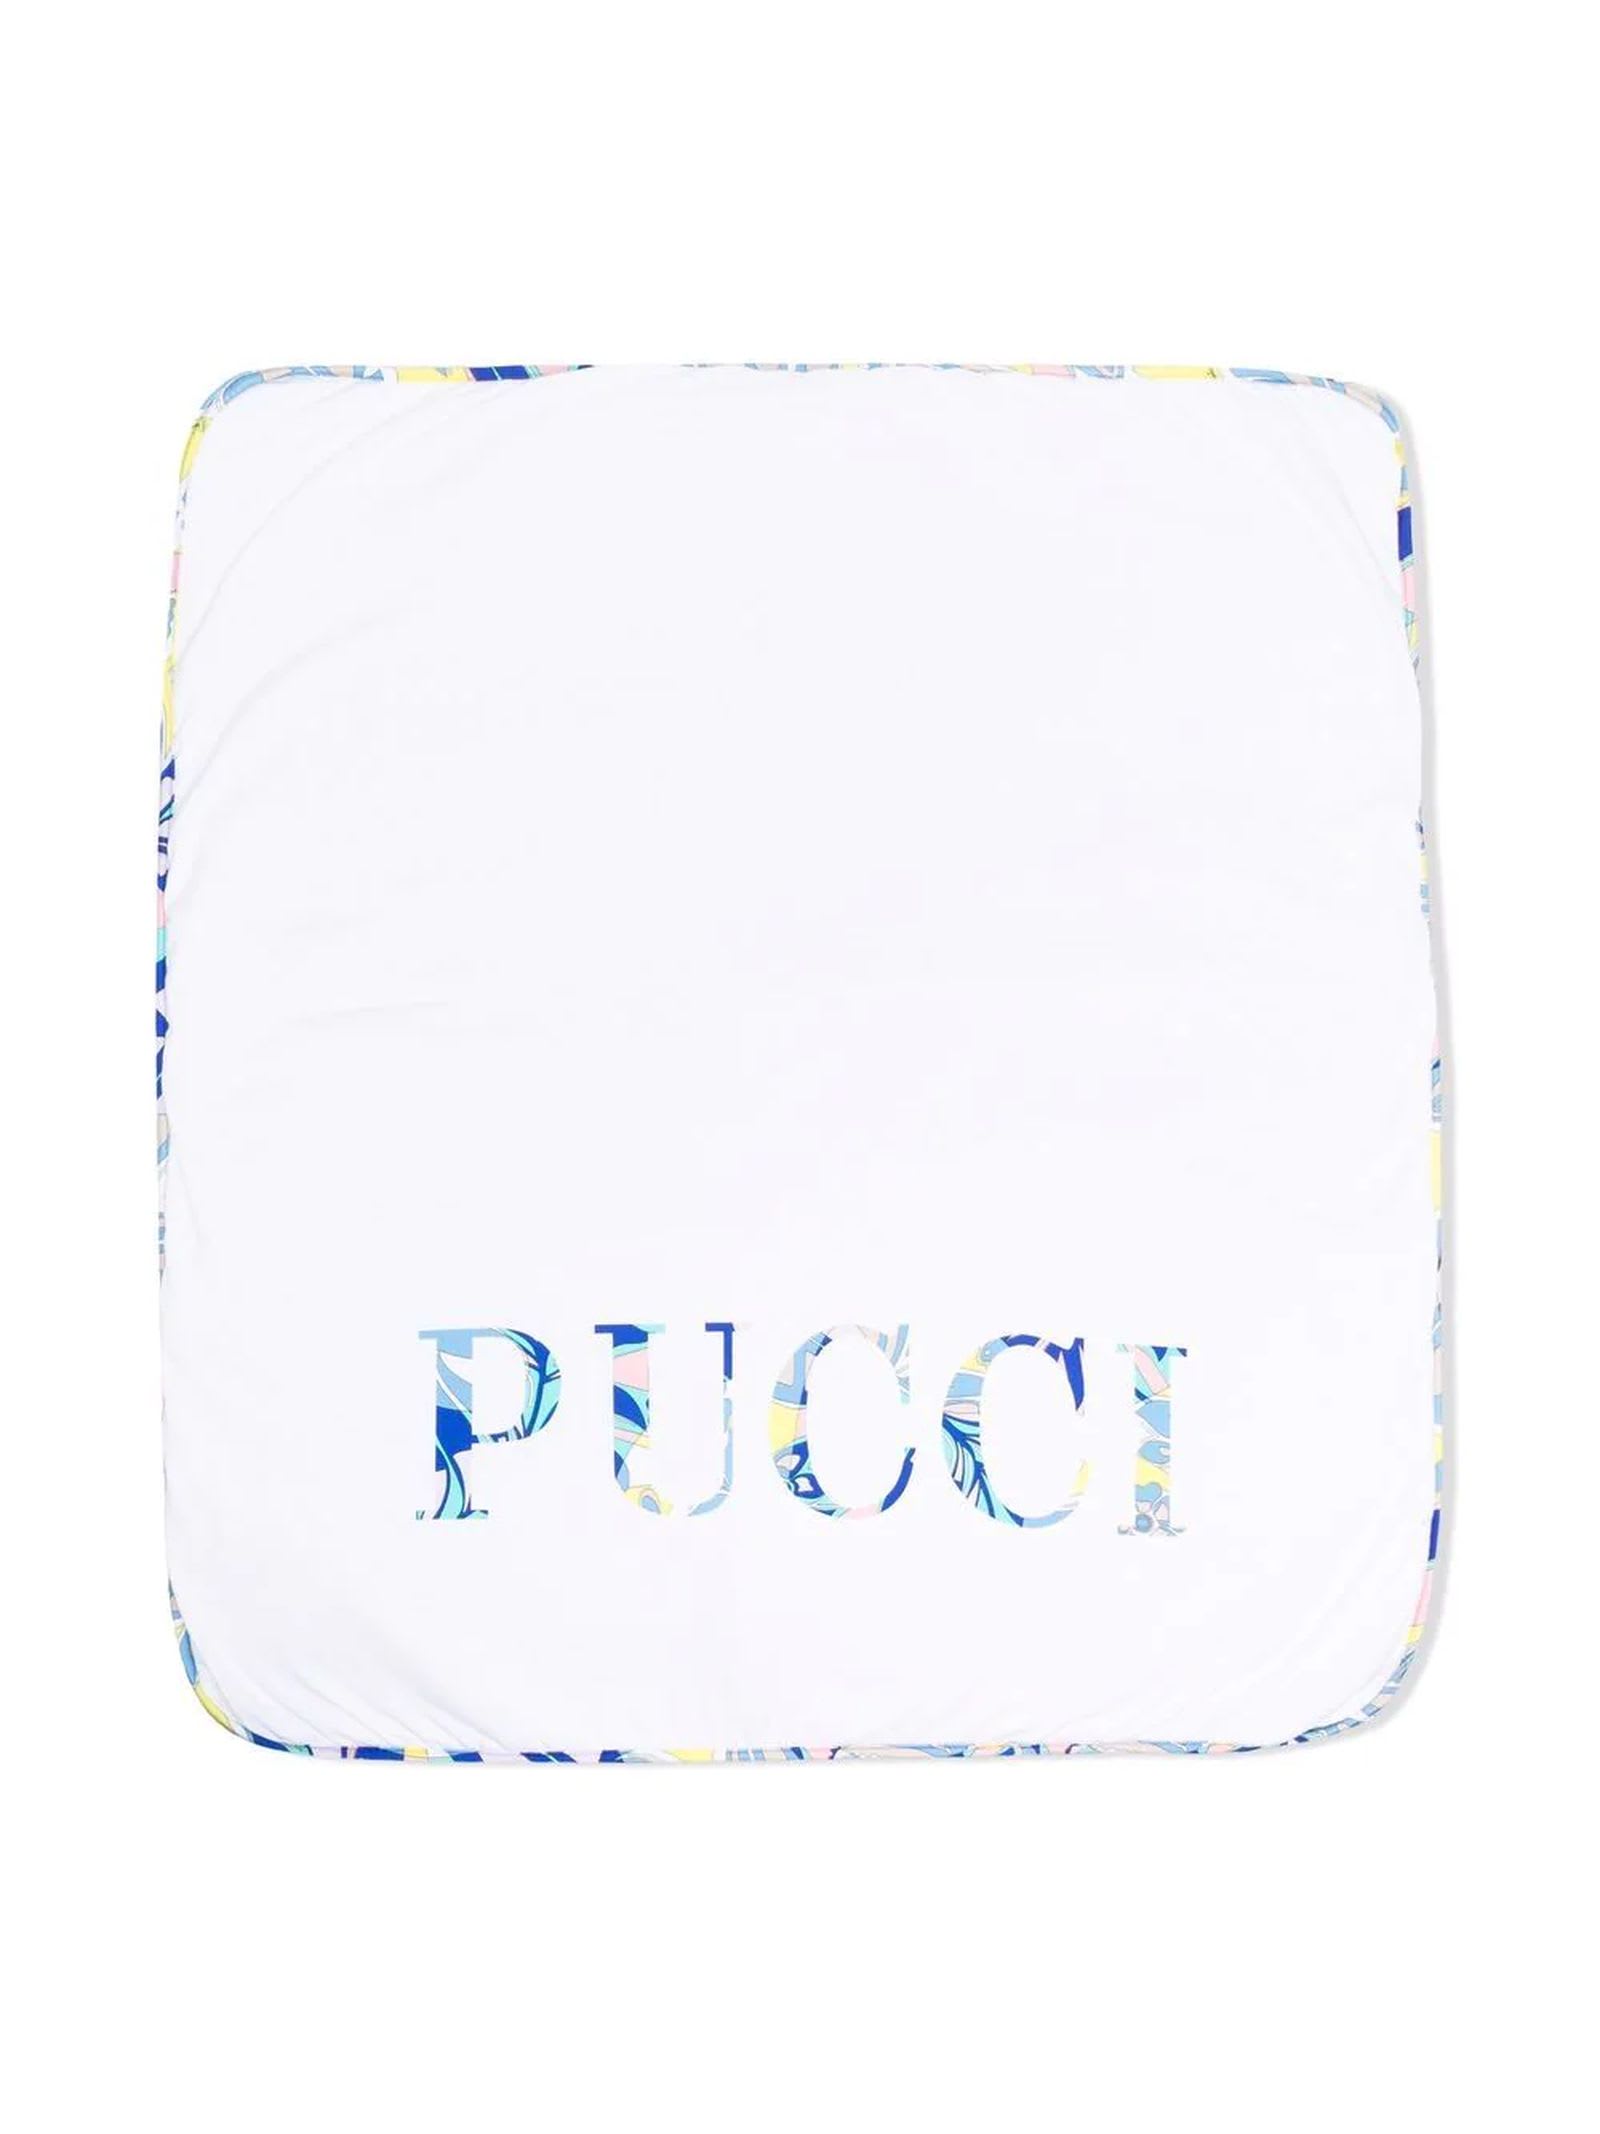 Emilio Pucci White Stretch Cotton Sleep Bag